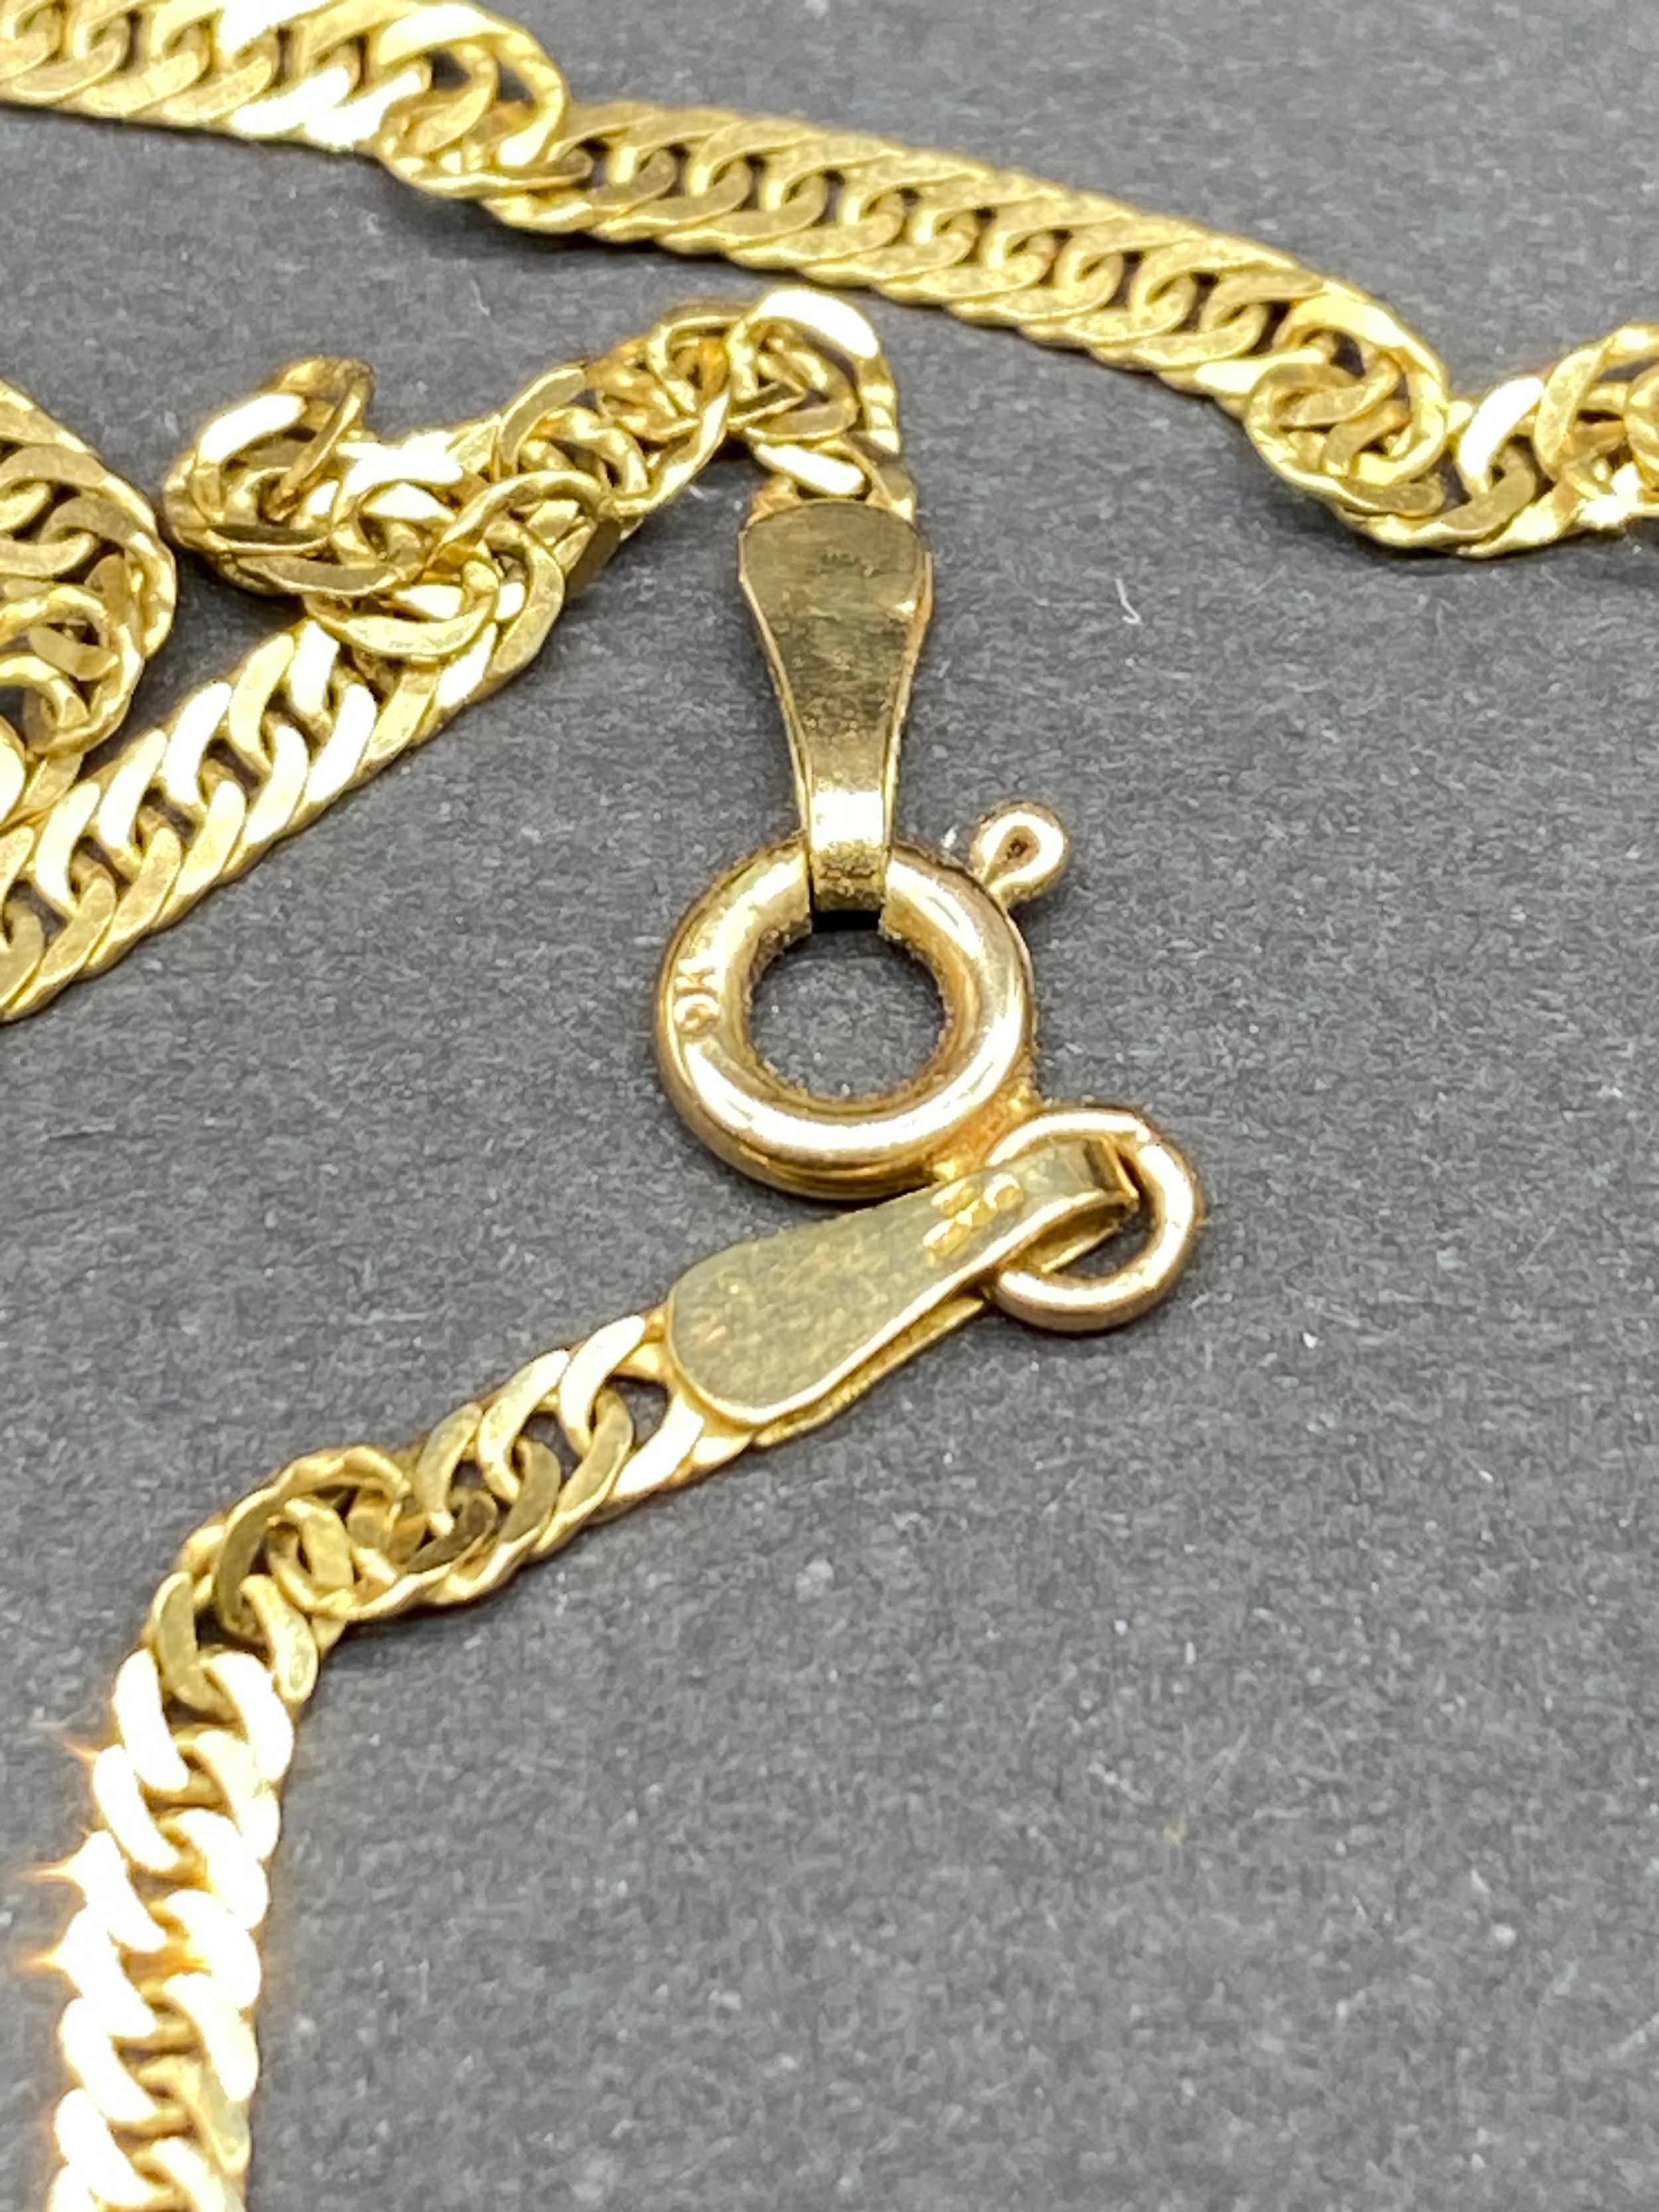 9ct gold 375 hallmarked twist design necklace [3.34] grams - Image 2 of 2